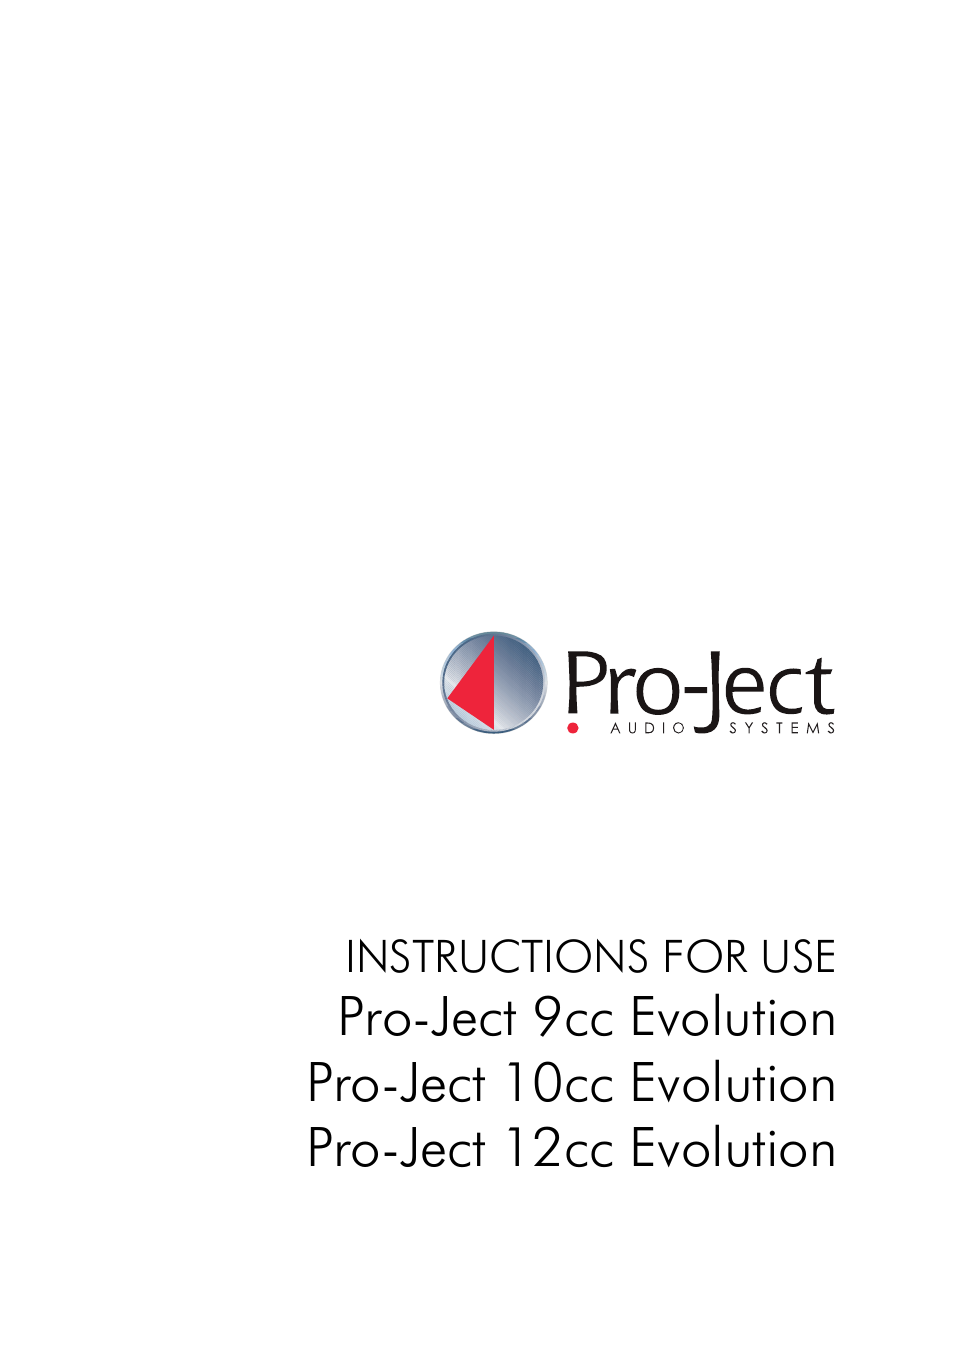 Pro-Ject 12cc Evolution